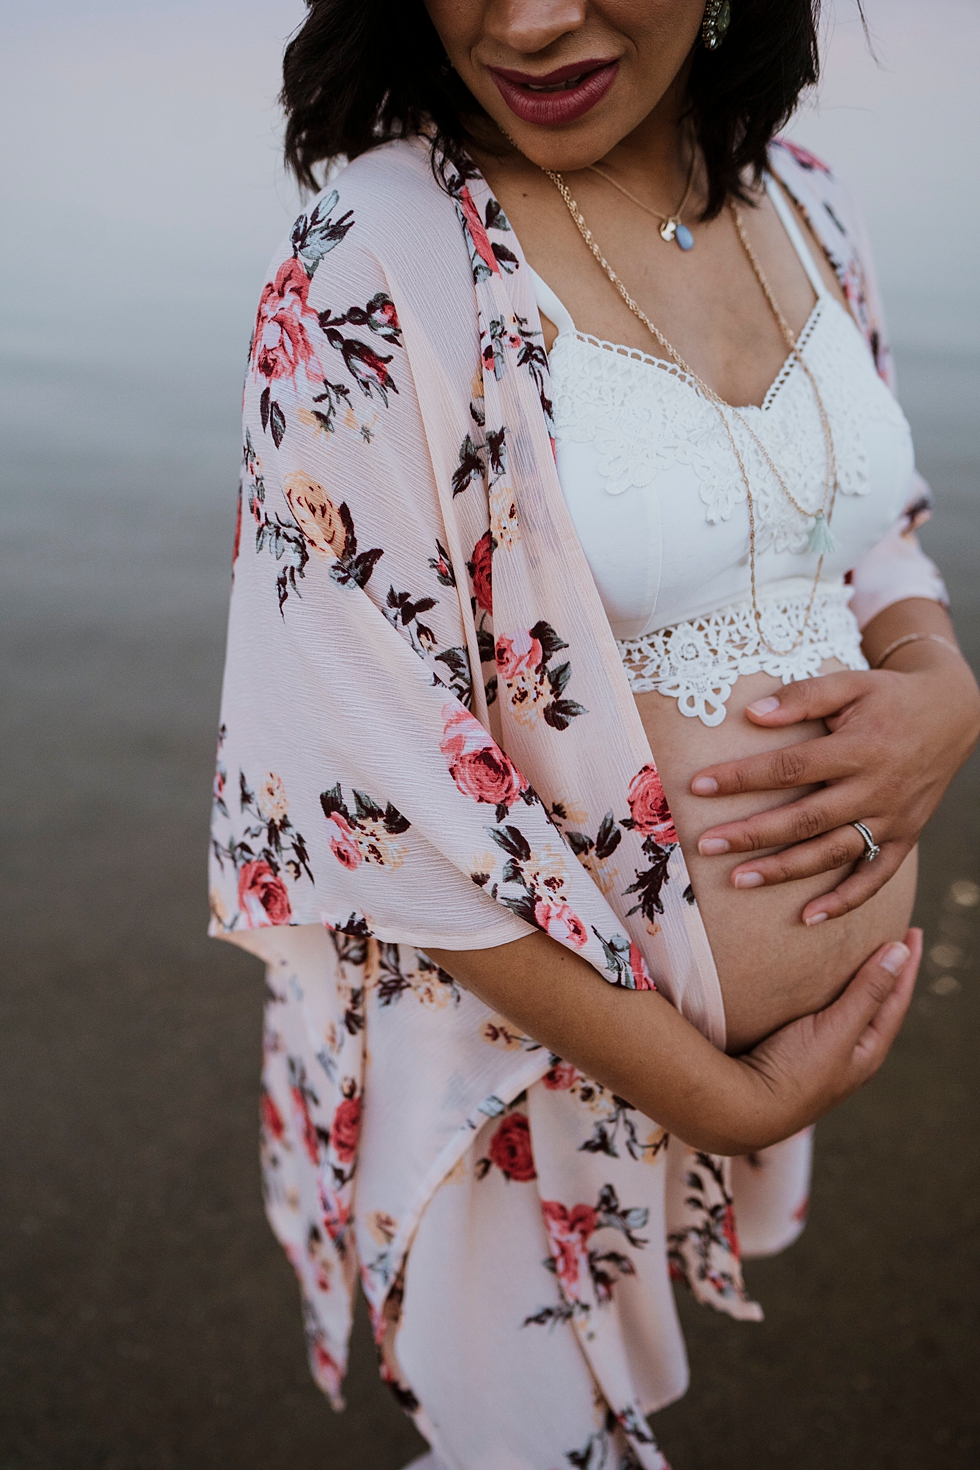  WATER MATERNITY PHOTO SHOOT MAMMA TO BE PREGNANCY MATERNITY PHOTOGRAPHER CINCINNATI OHIO PHOTOGRAPHER MATERNITY SESSION #photographer #maternityphotos #pregnancy #babybump #maternityphotoshoot #cincinnatiphotographer #louisvillephotographer 